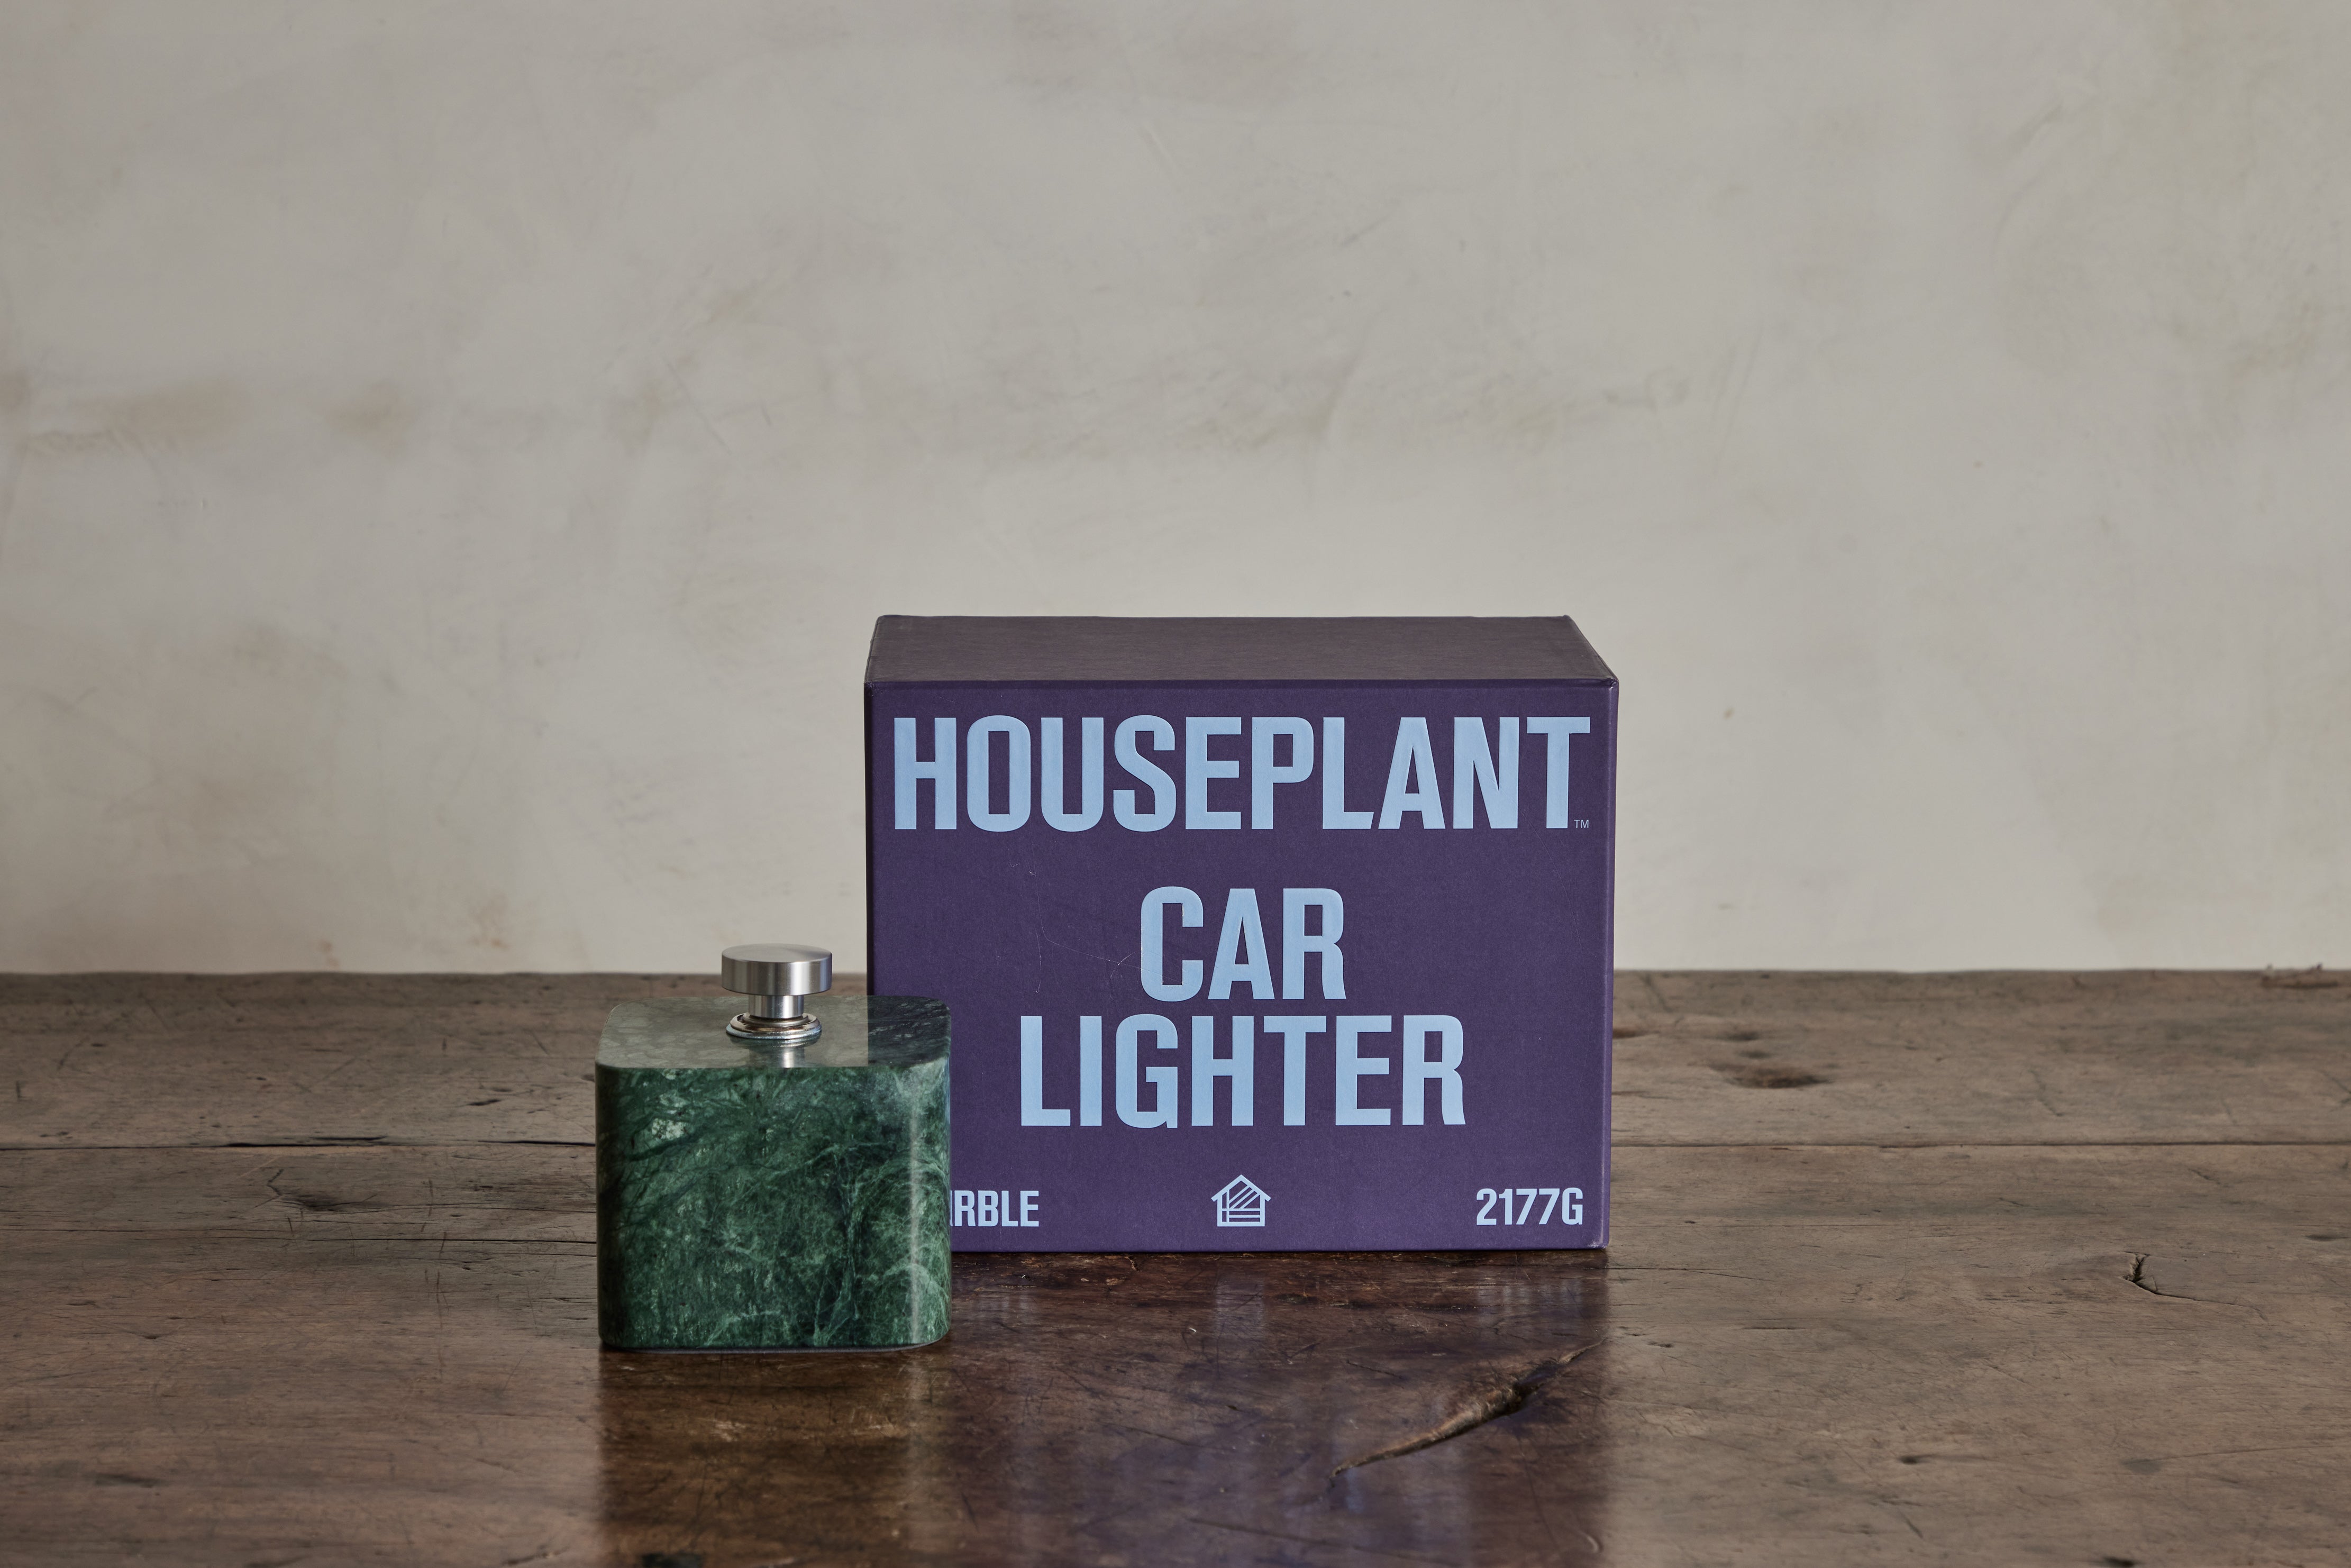 Houseplant, Marble Car Lighter